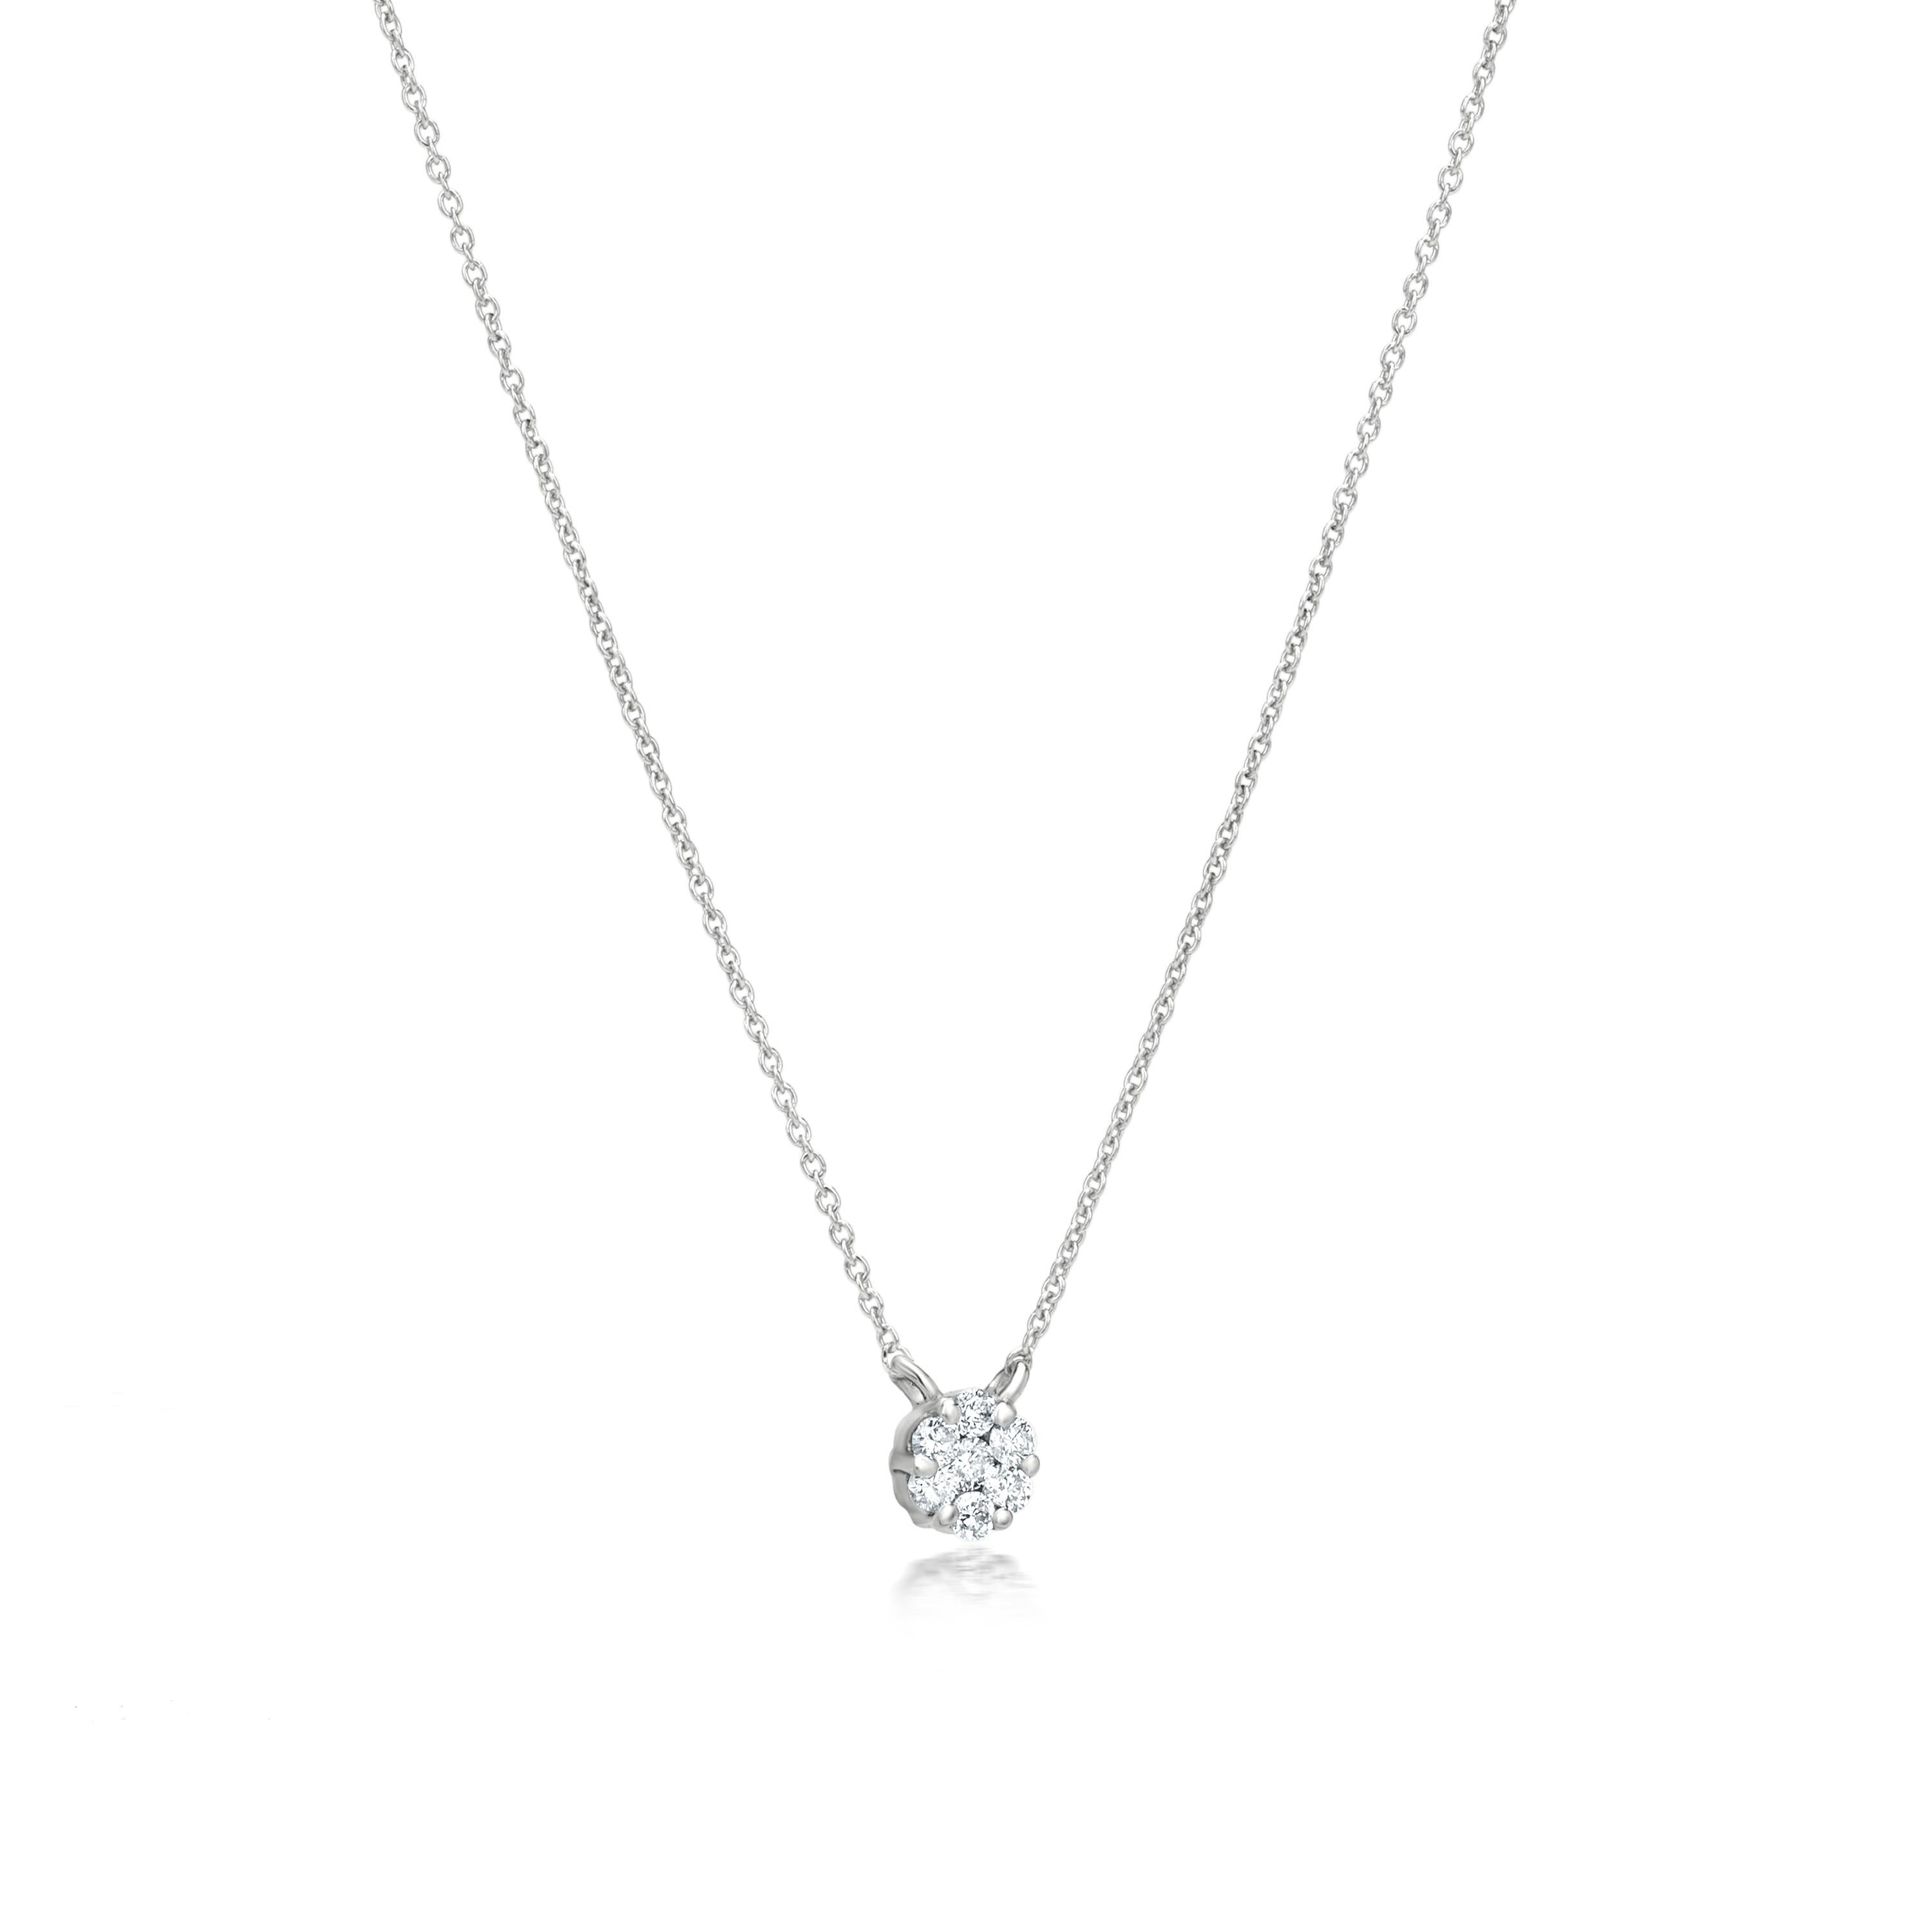 Round Cut Luxle Cluster Diamond Pendant Necklace in 18K White Gold